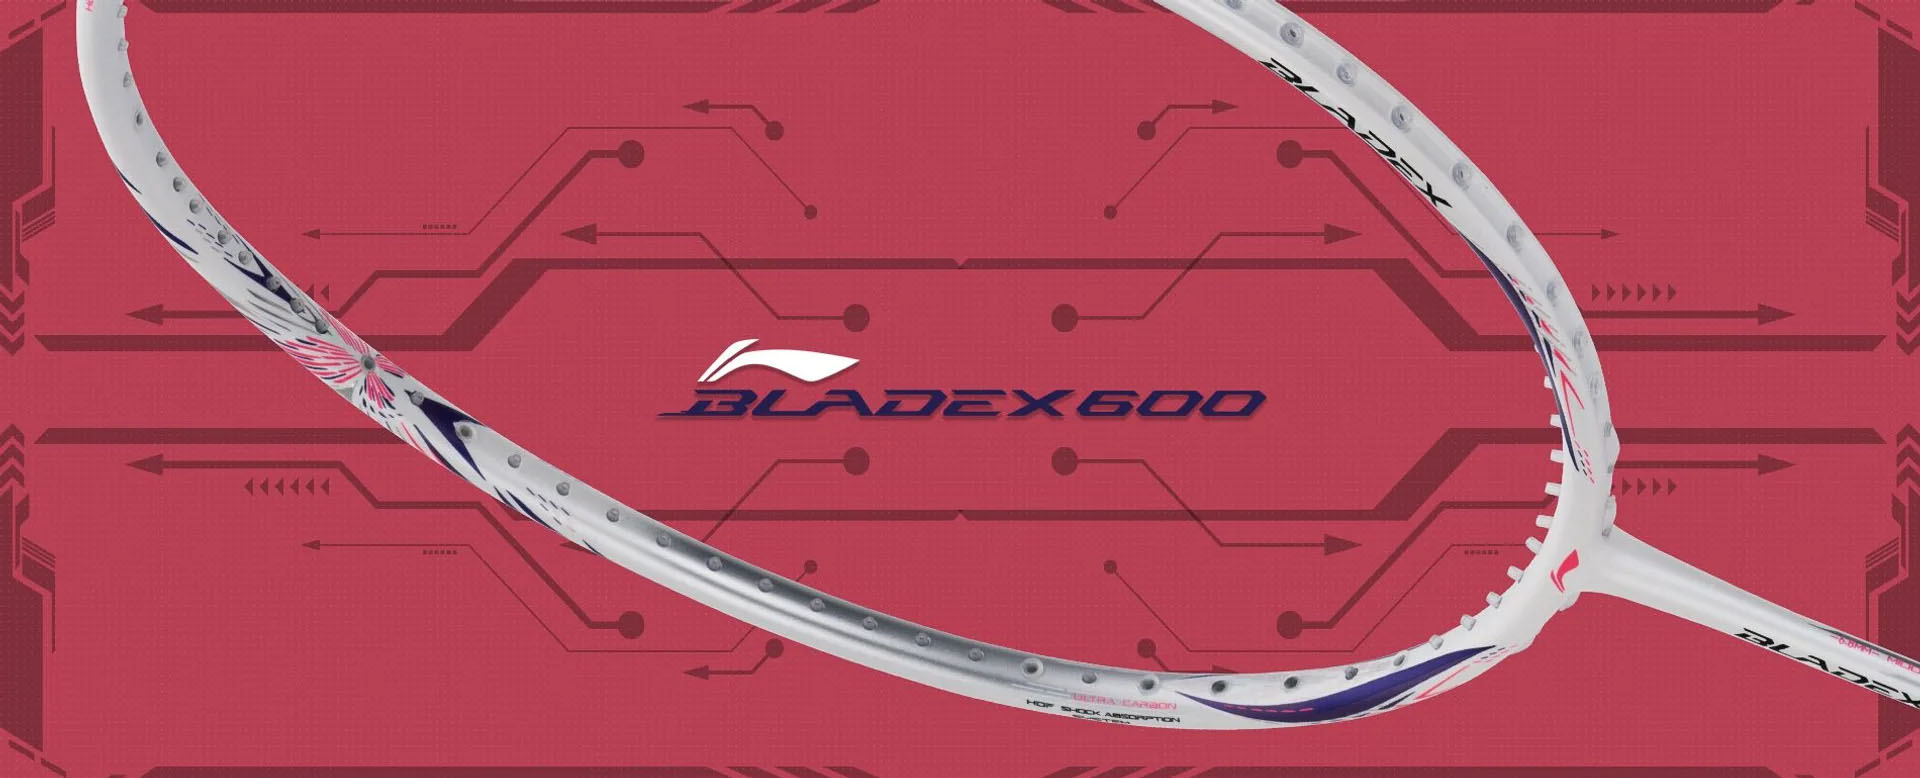 Lining Bladex 600 Badminton Racket